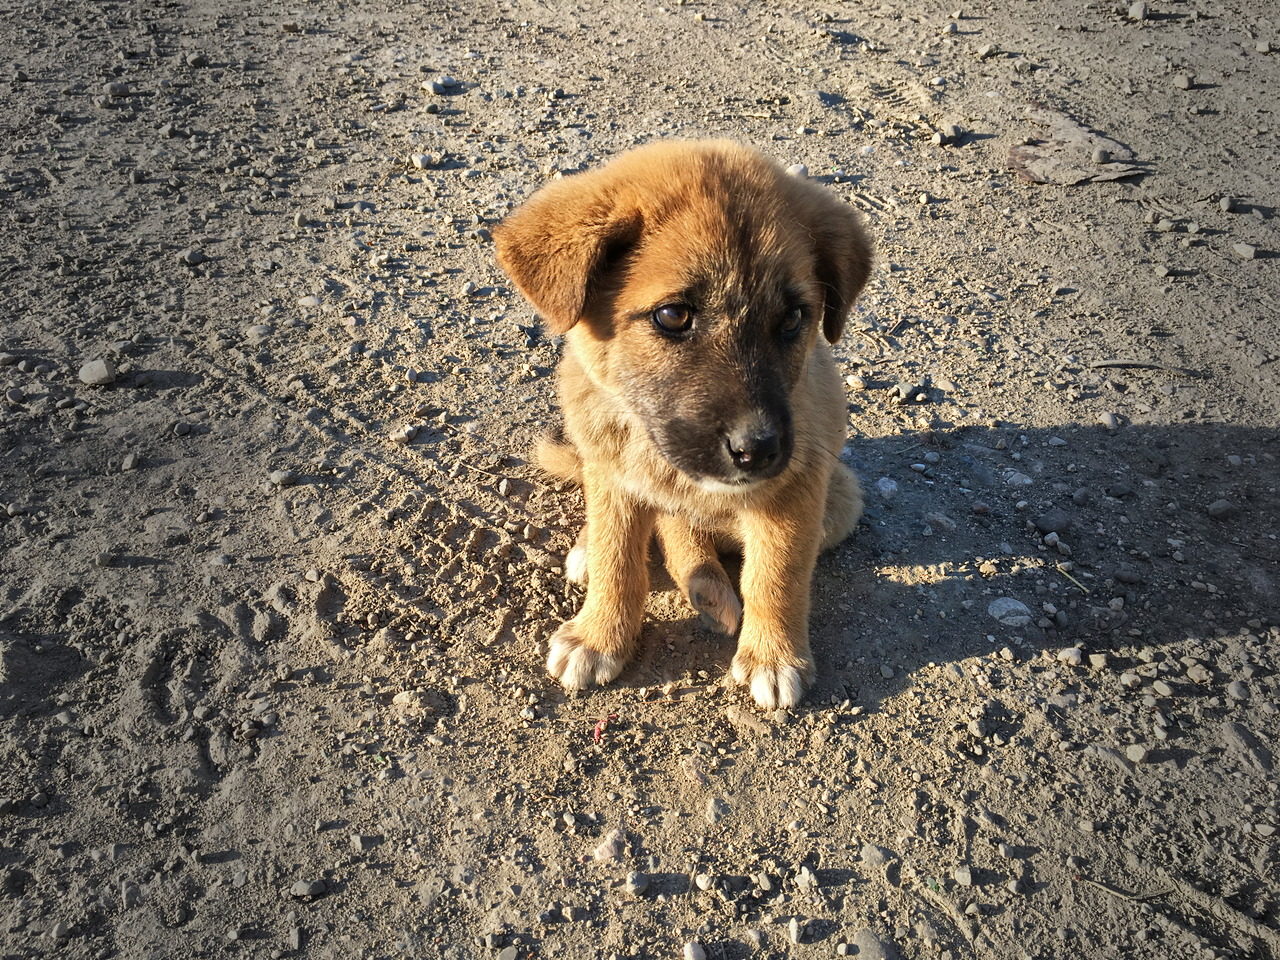 Animal friend in Azerbaijan